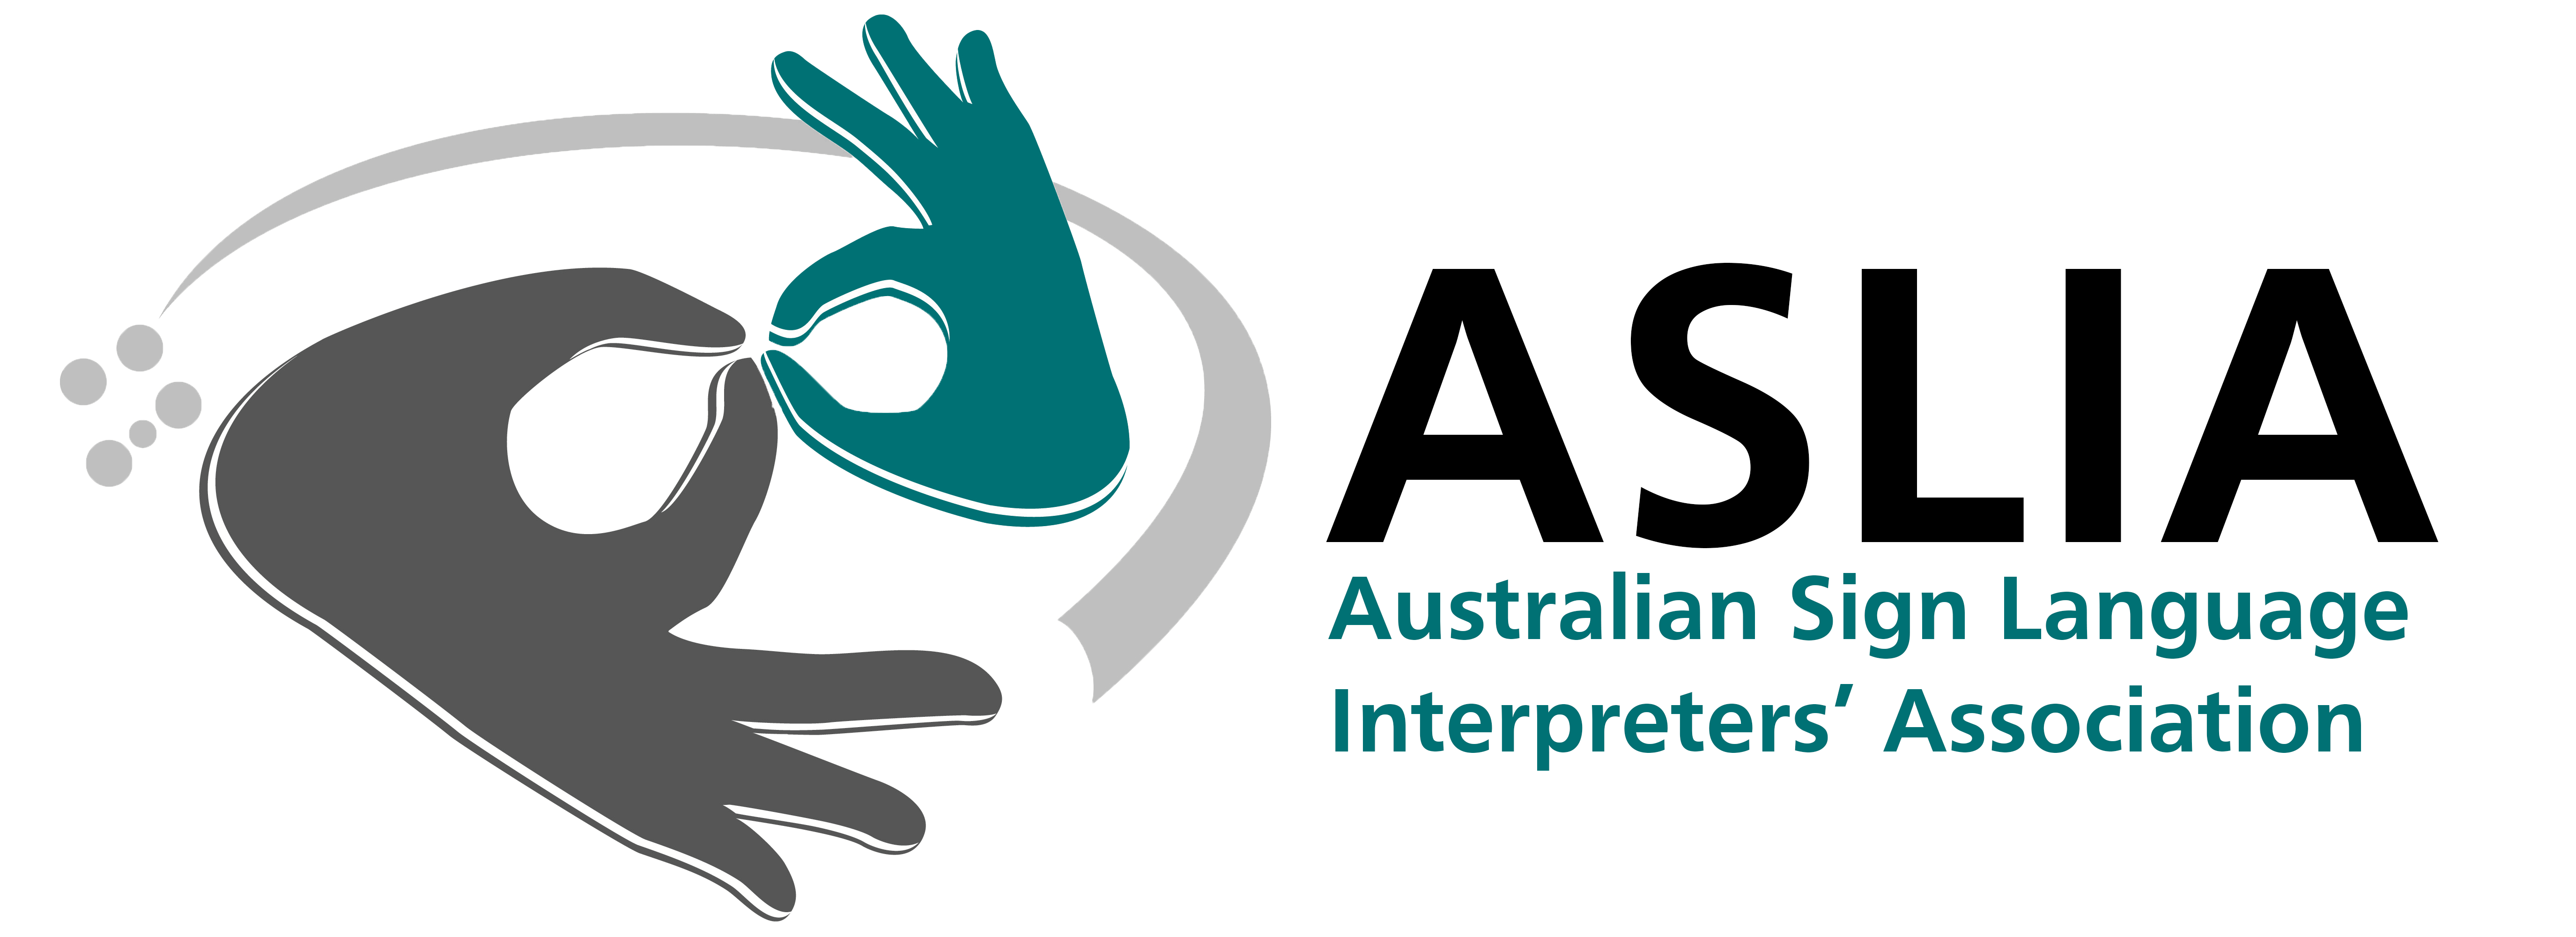 Australia Sign Language Interpreters' Association logo